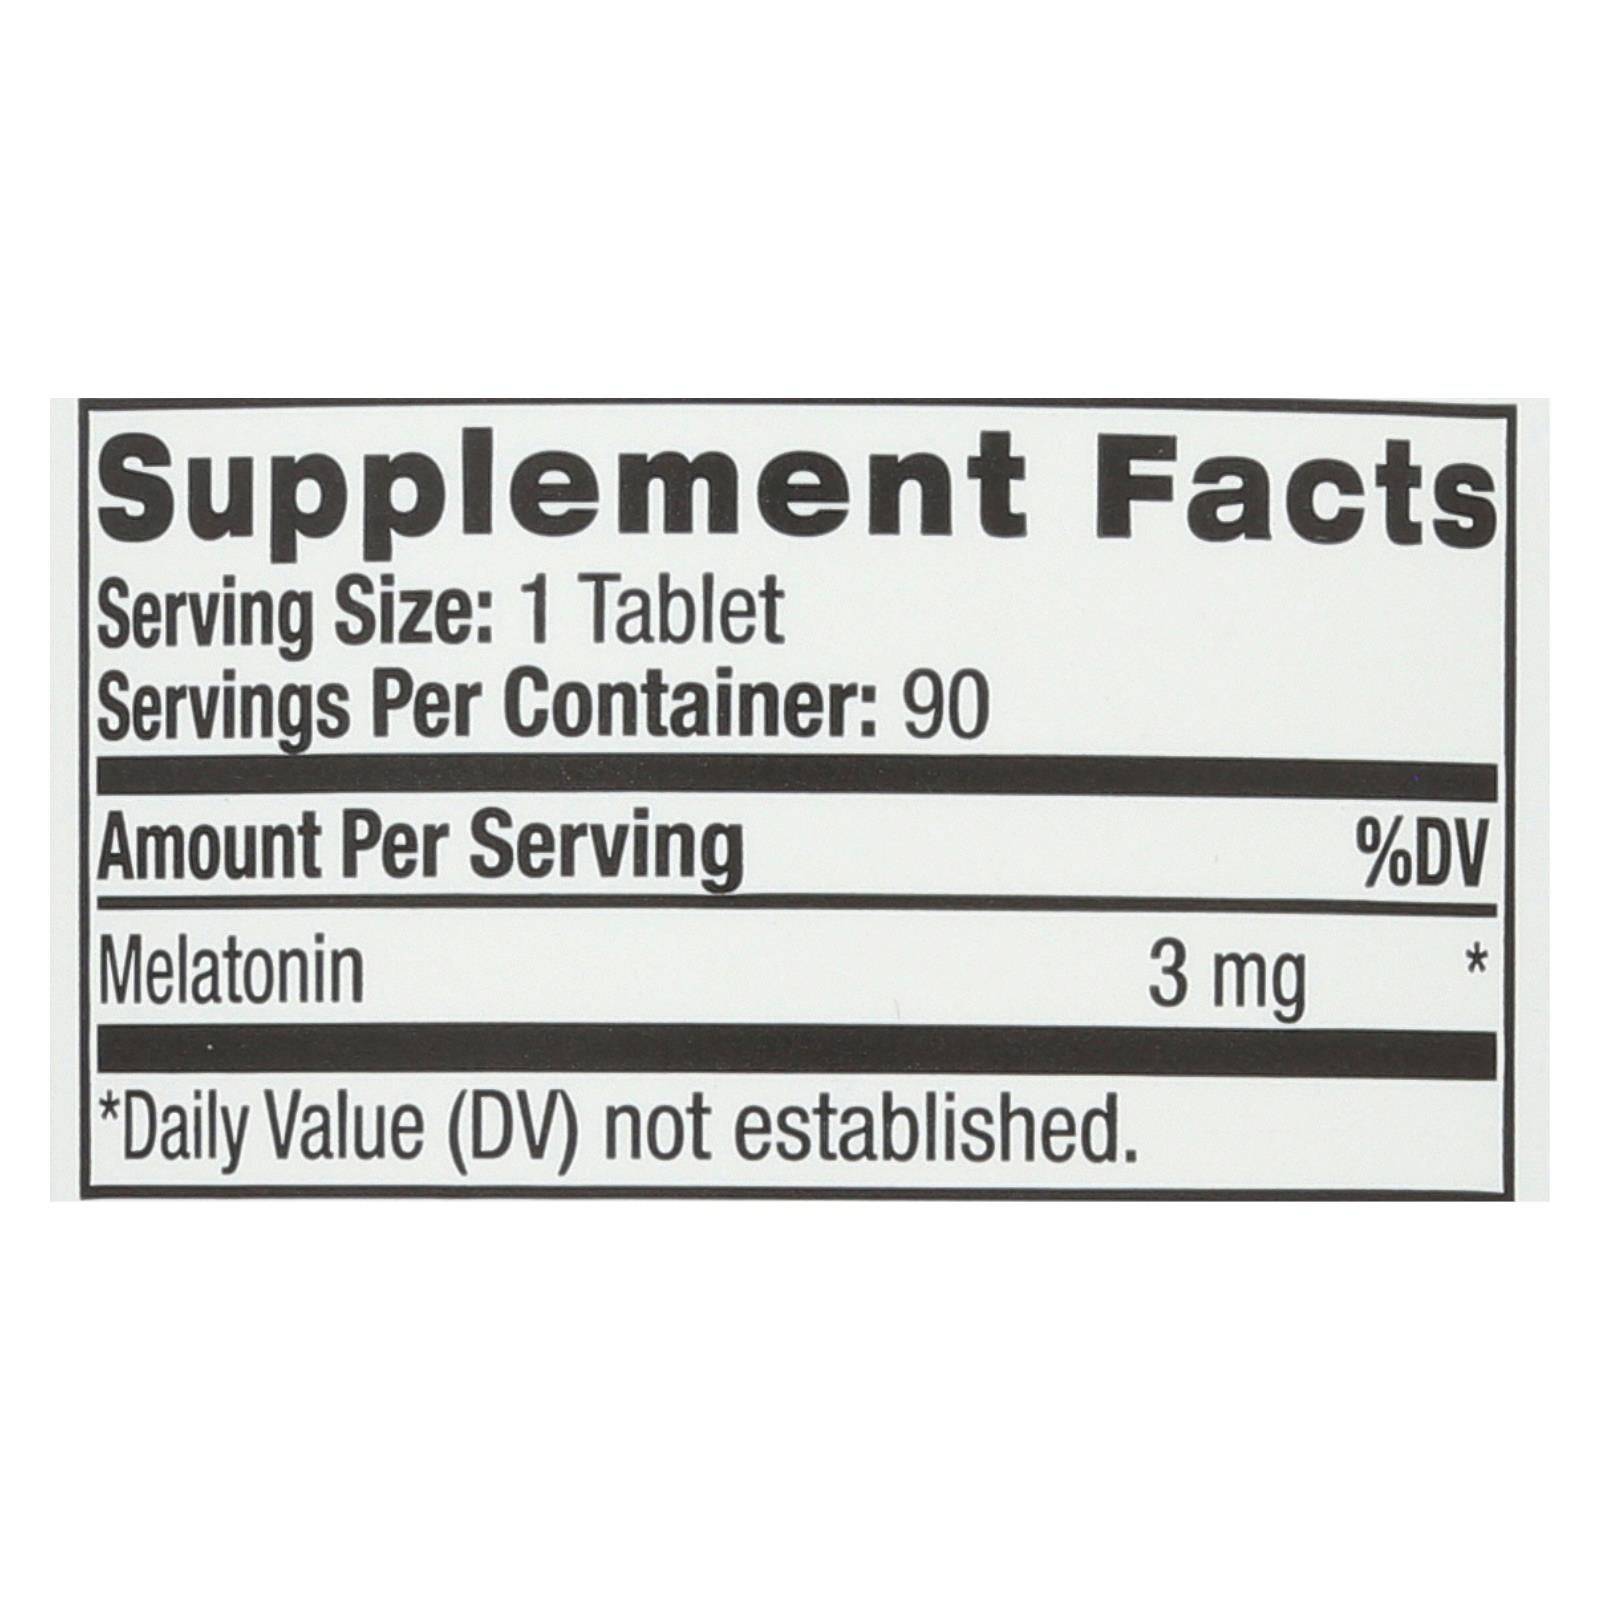 Natrol Melatonin Fast Dissolve Strawberry - 3 Mg - 90 Tablets | OnlyNaturals.us